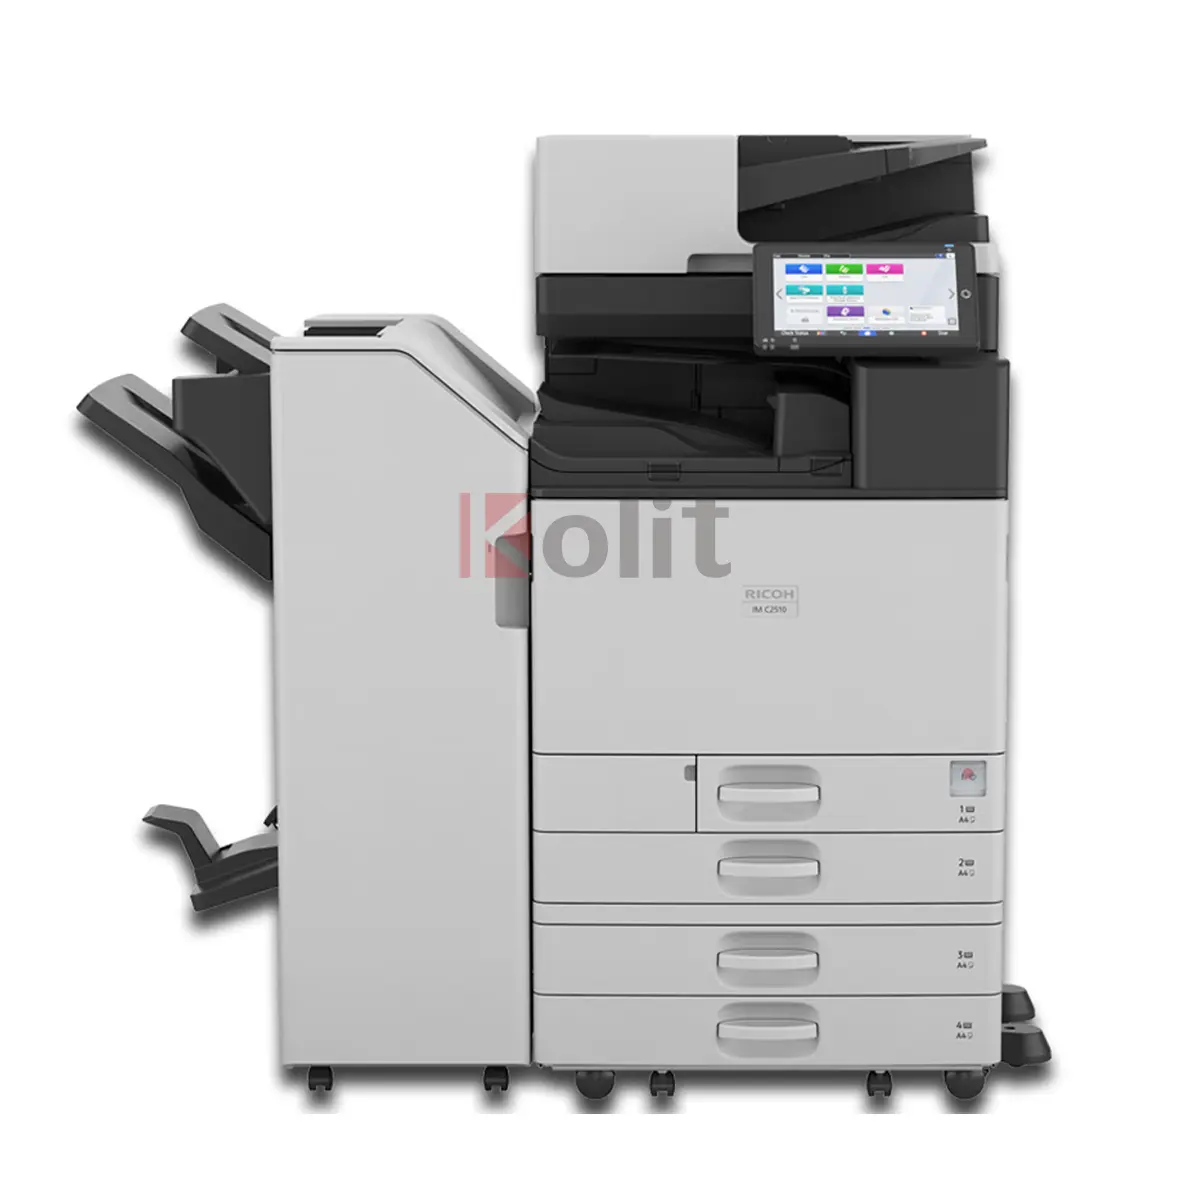 Sale Price Brand new Ricoh IMC2010 IMC2510 copier machine with all-in-one A3 colour laser printer scanner copier